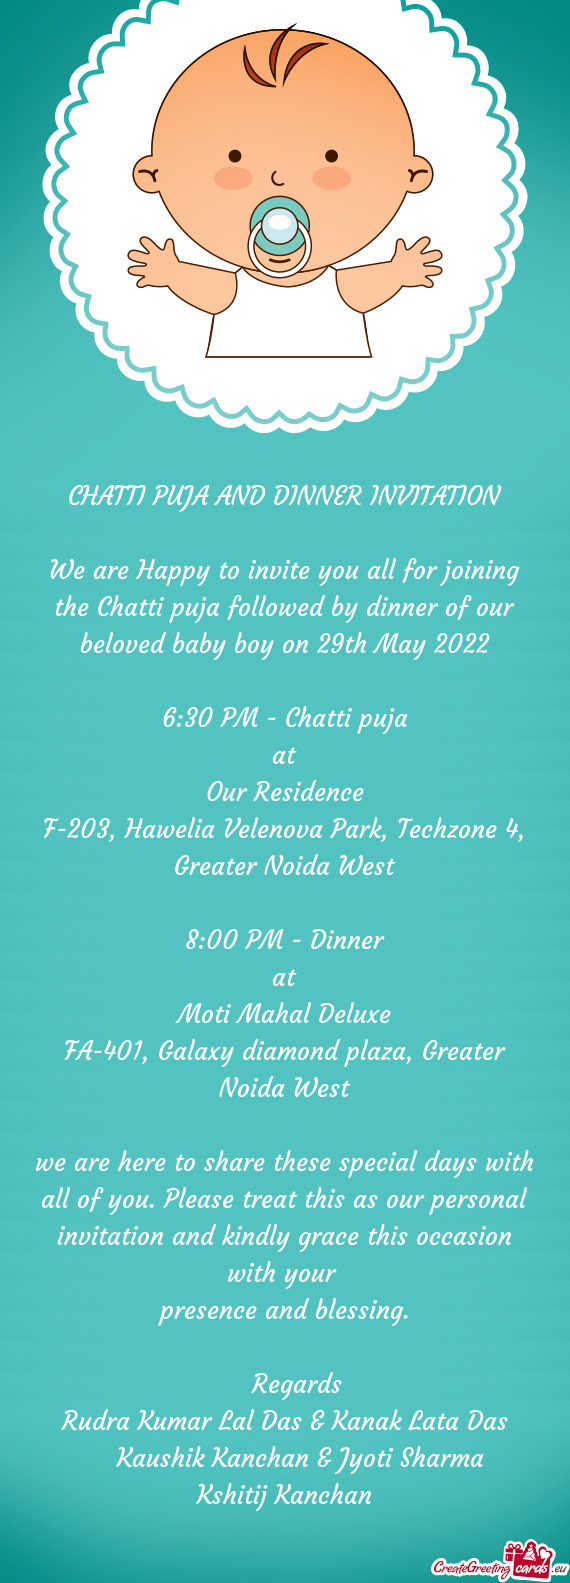 CHATTI PUJA AND DINNER INVITATION